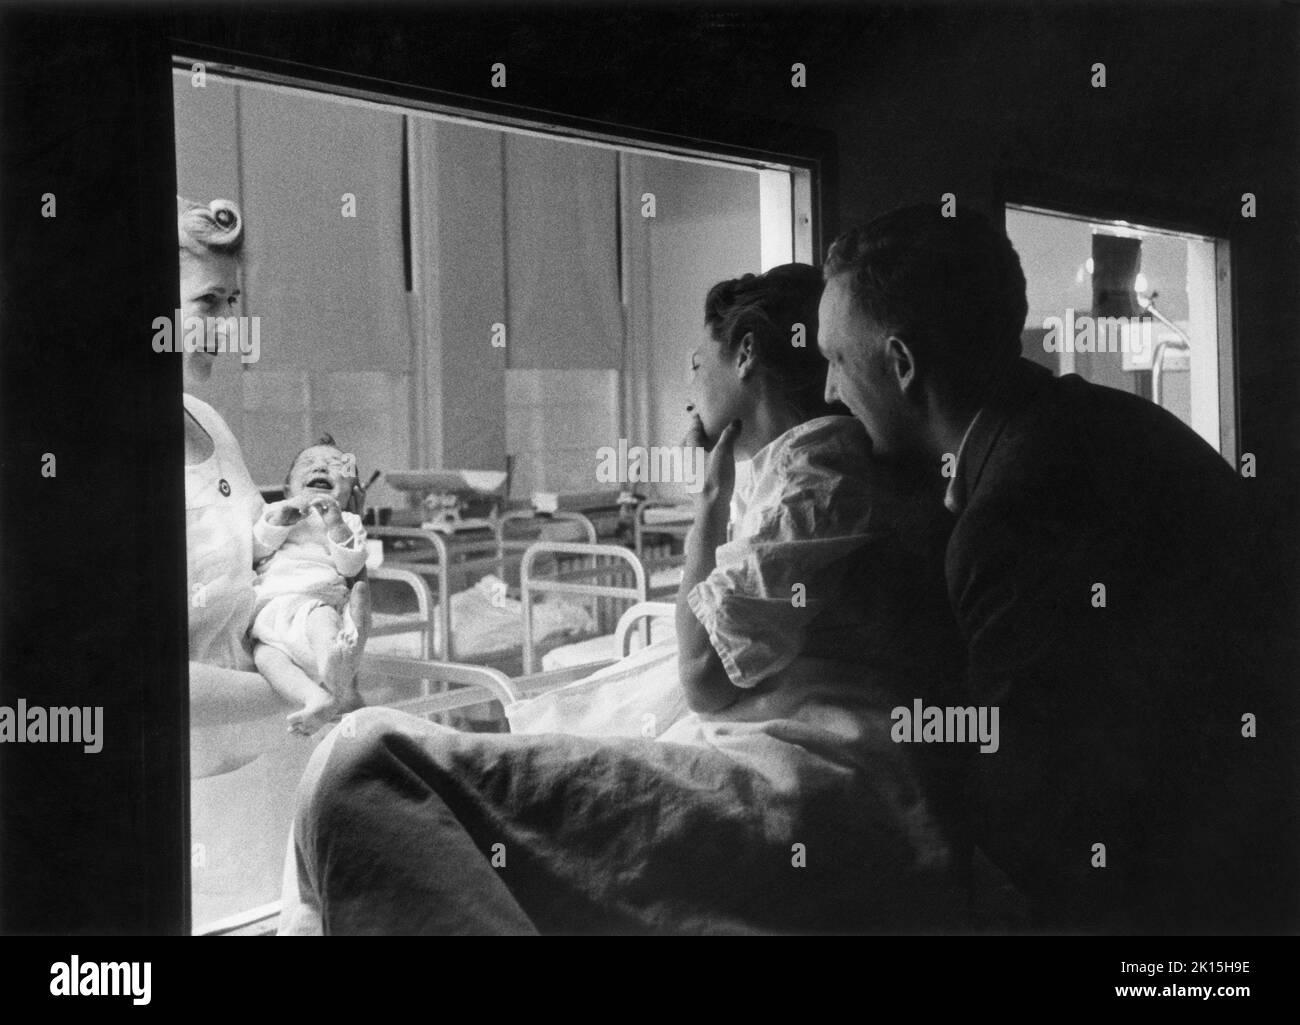 Couple regarding their new baby through the window of a hospital nursery. Stock Photo